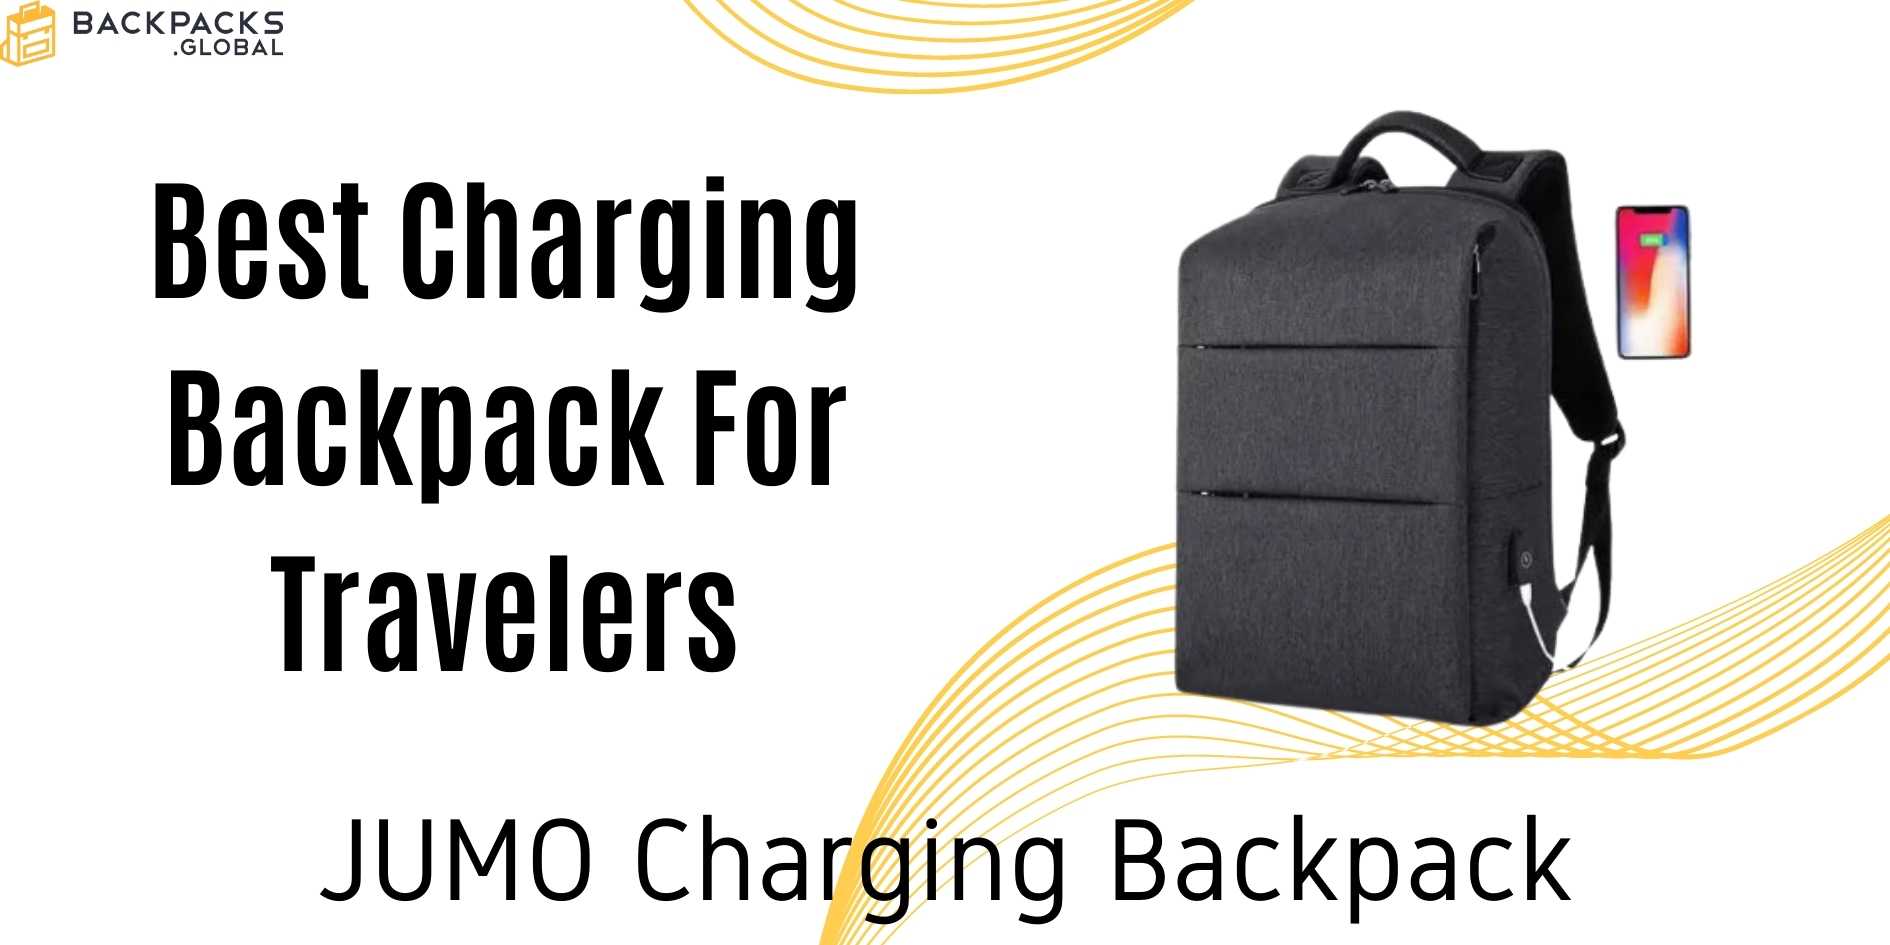 JUMO Charging Backpack